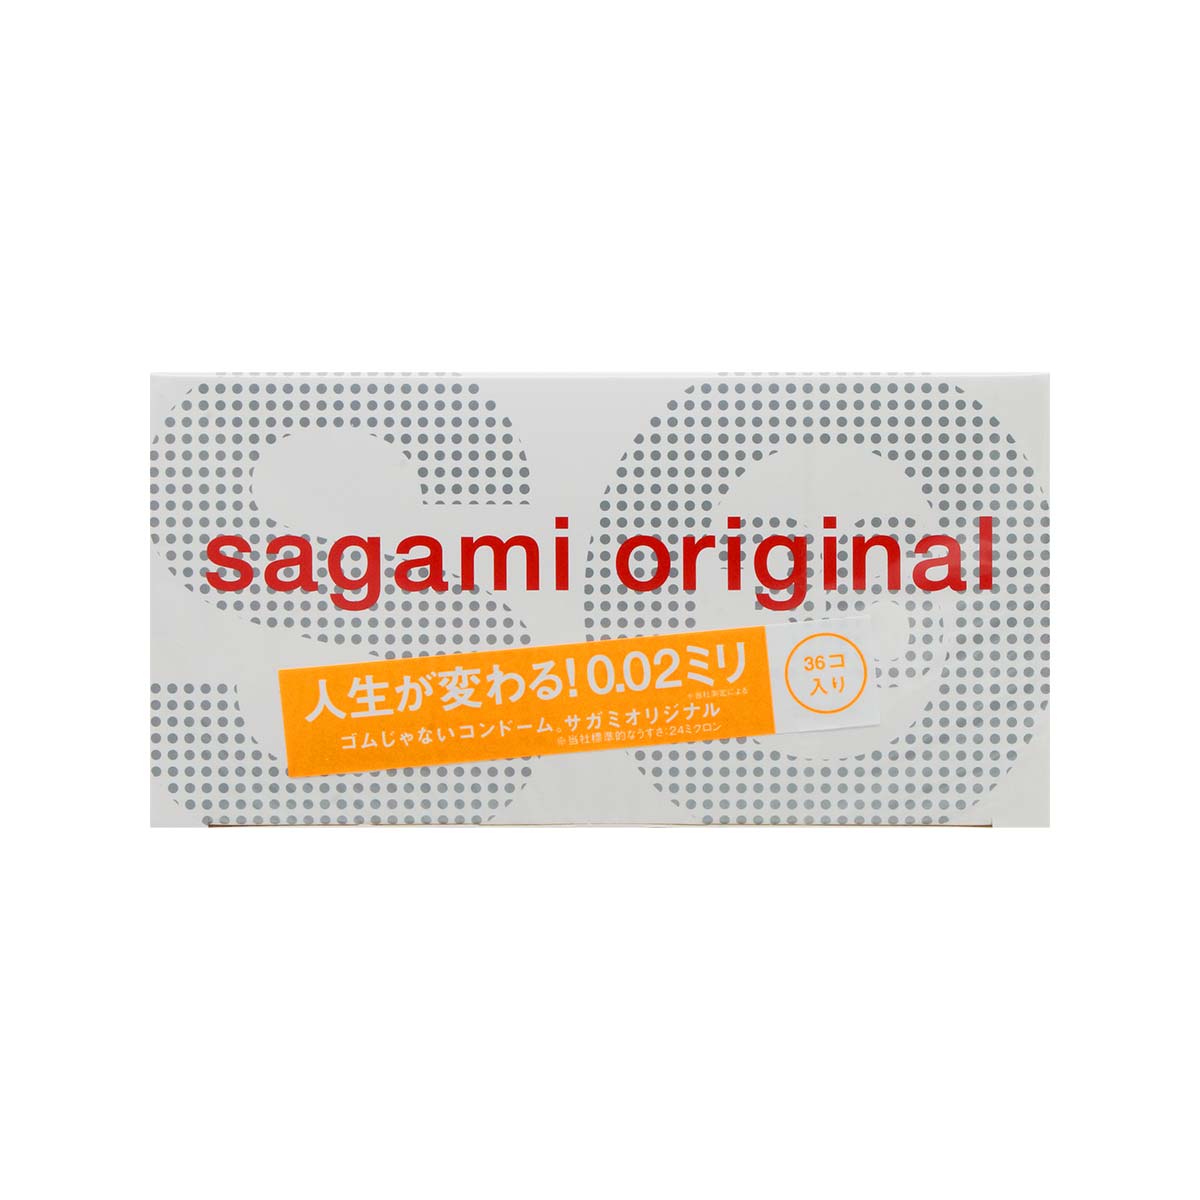 Sagami Original 0.02 36's Pack PU Condom-thumb_2